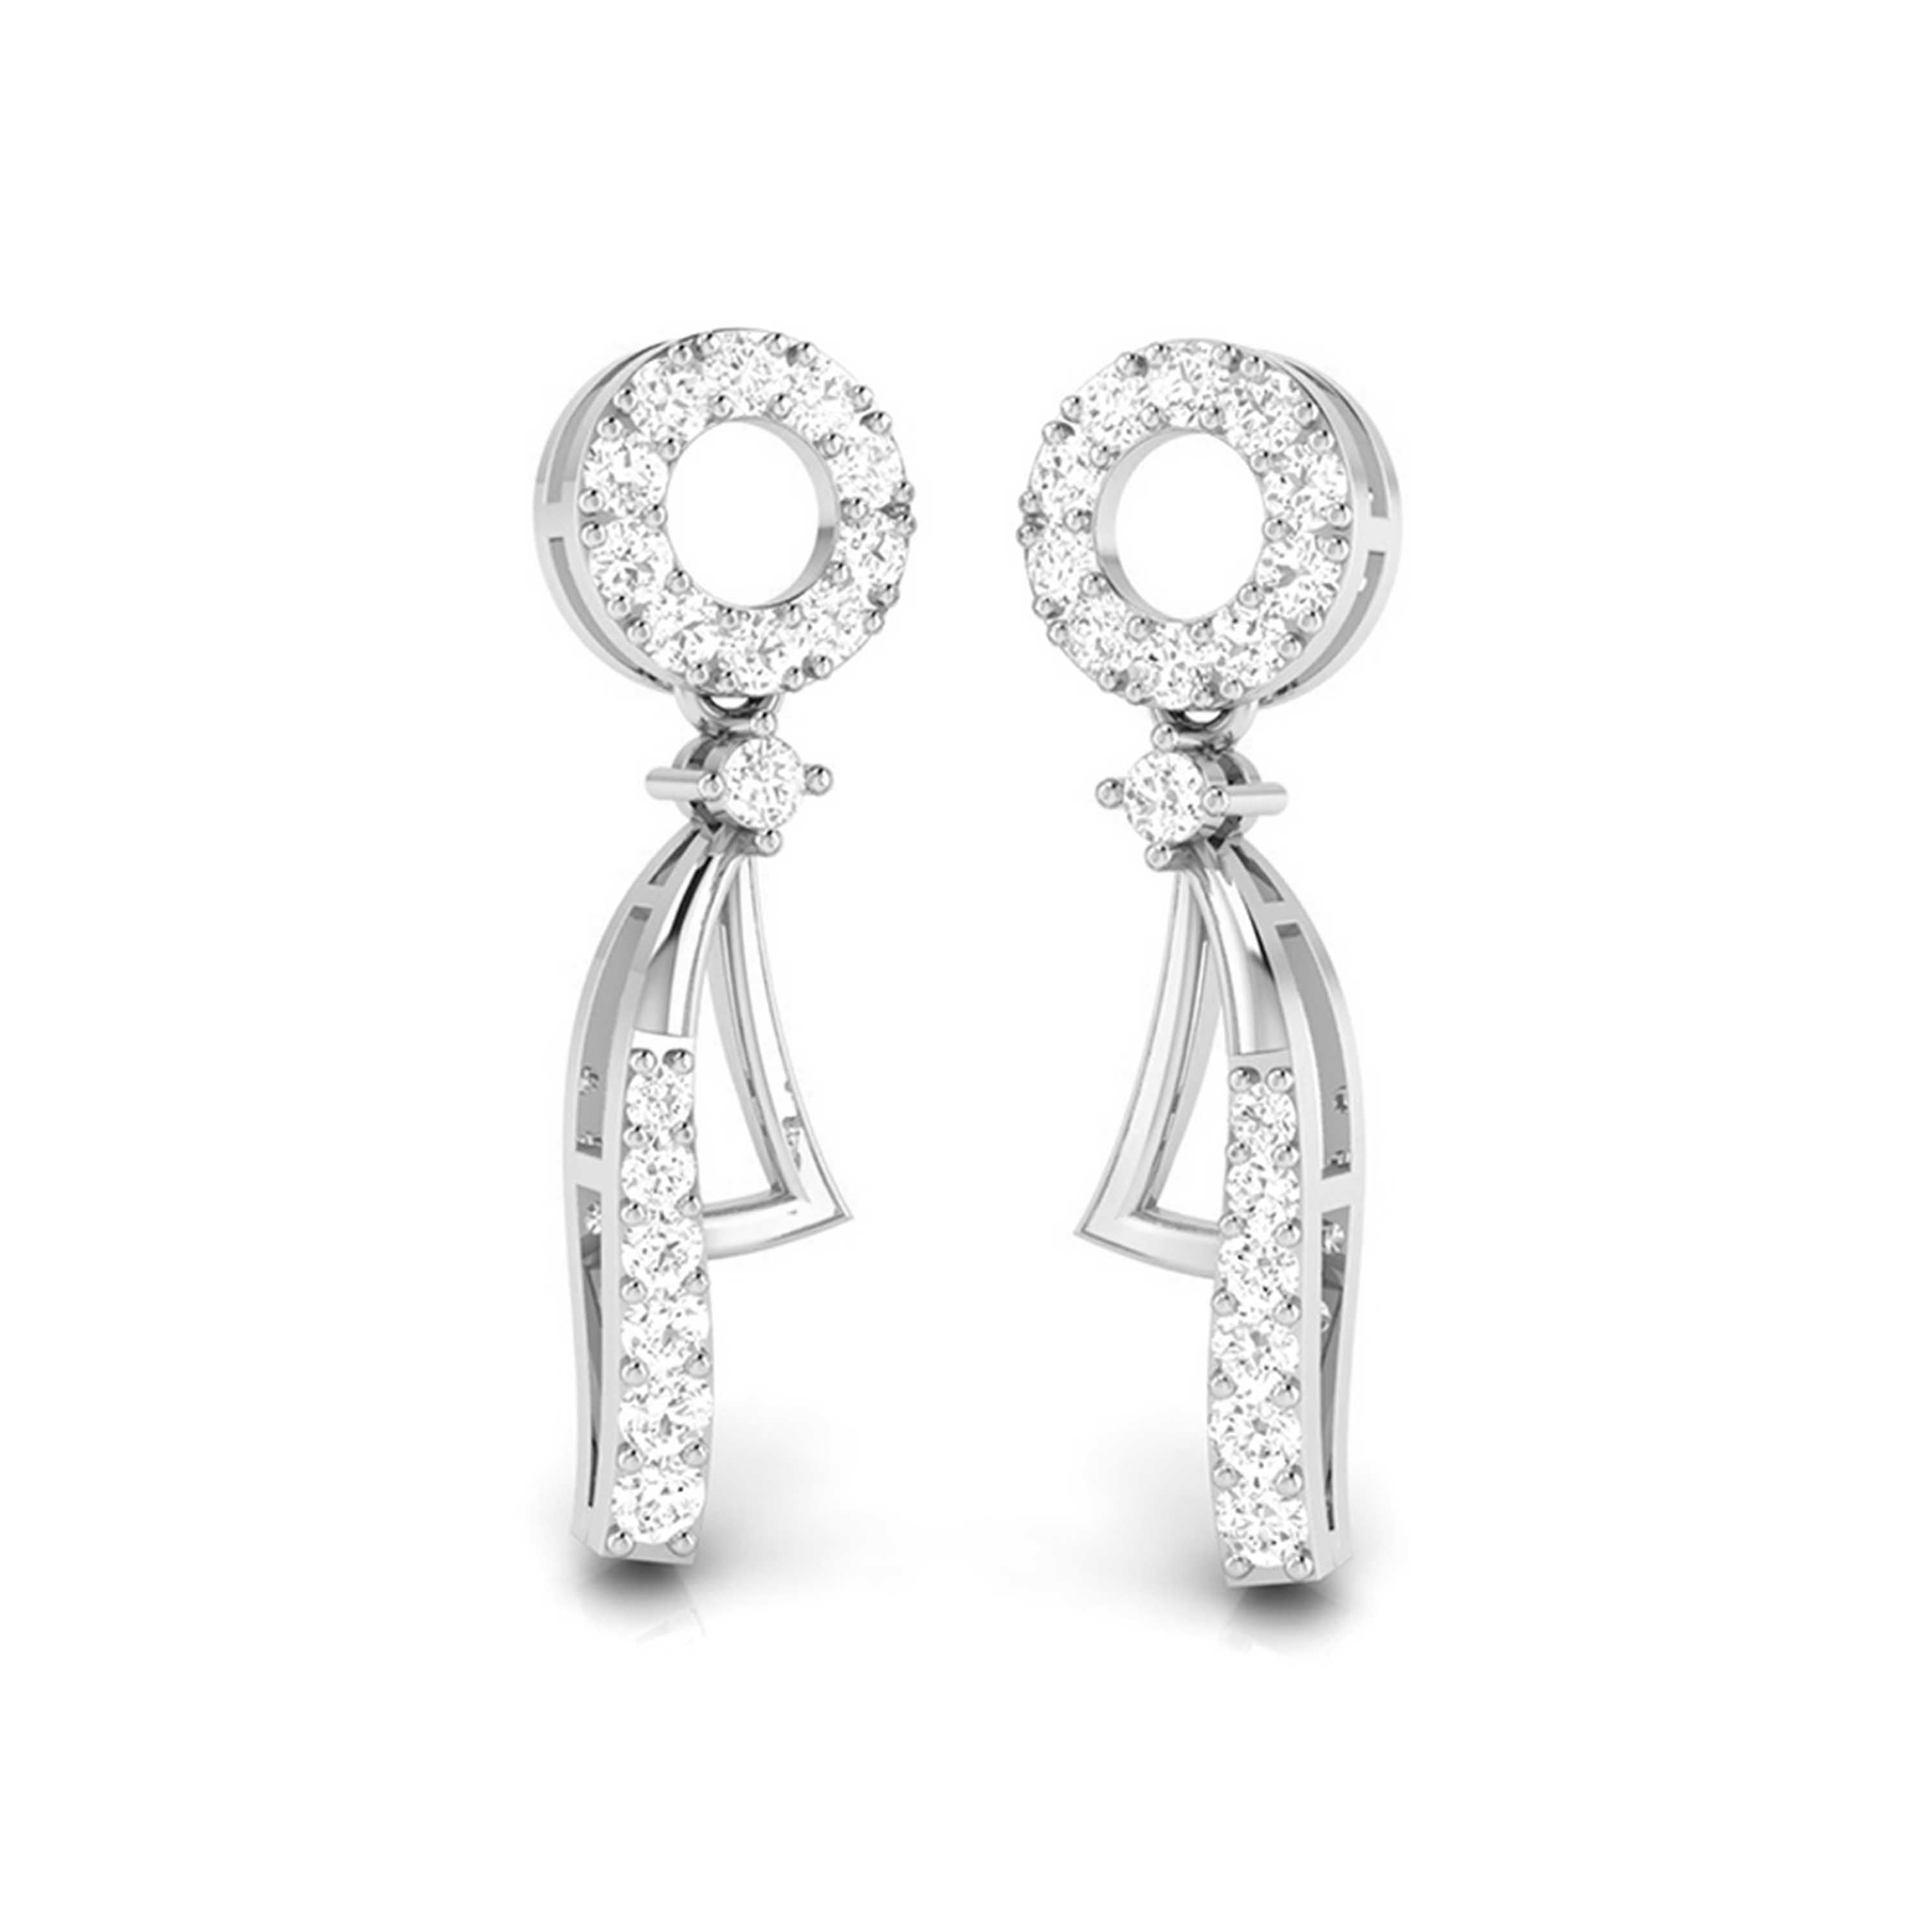 Buy Designer Diamond Stud Earrings Online